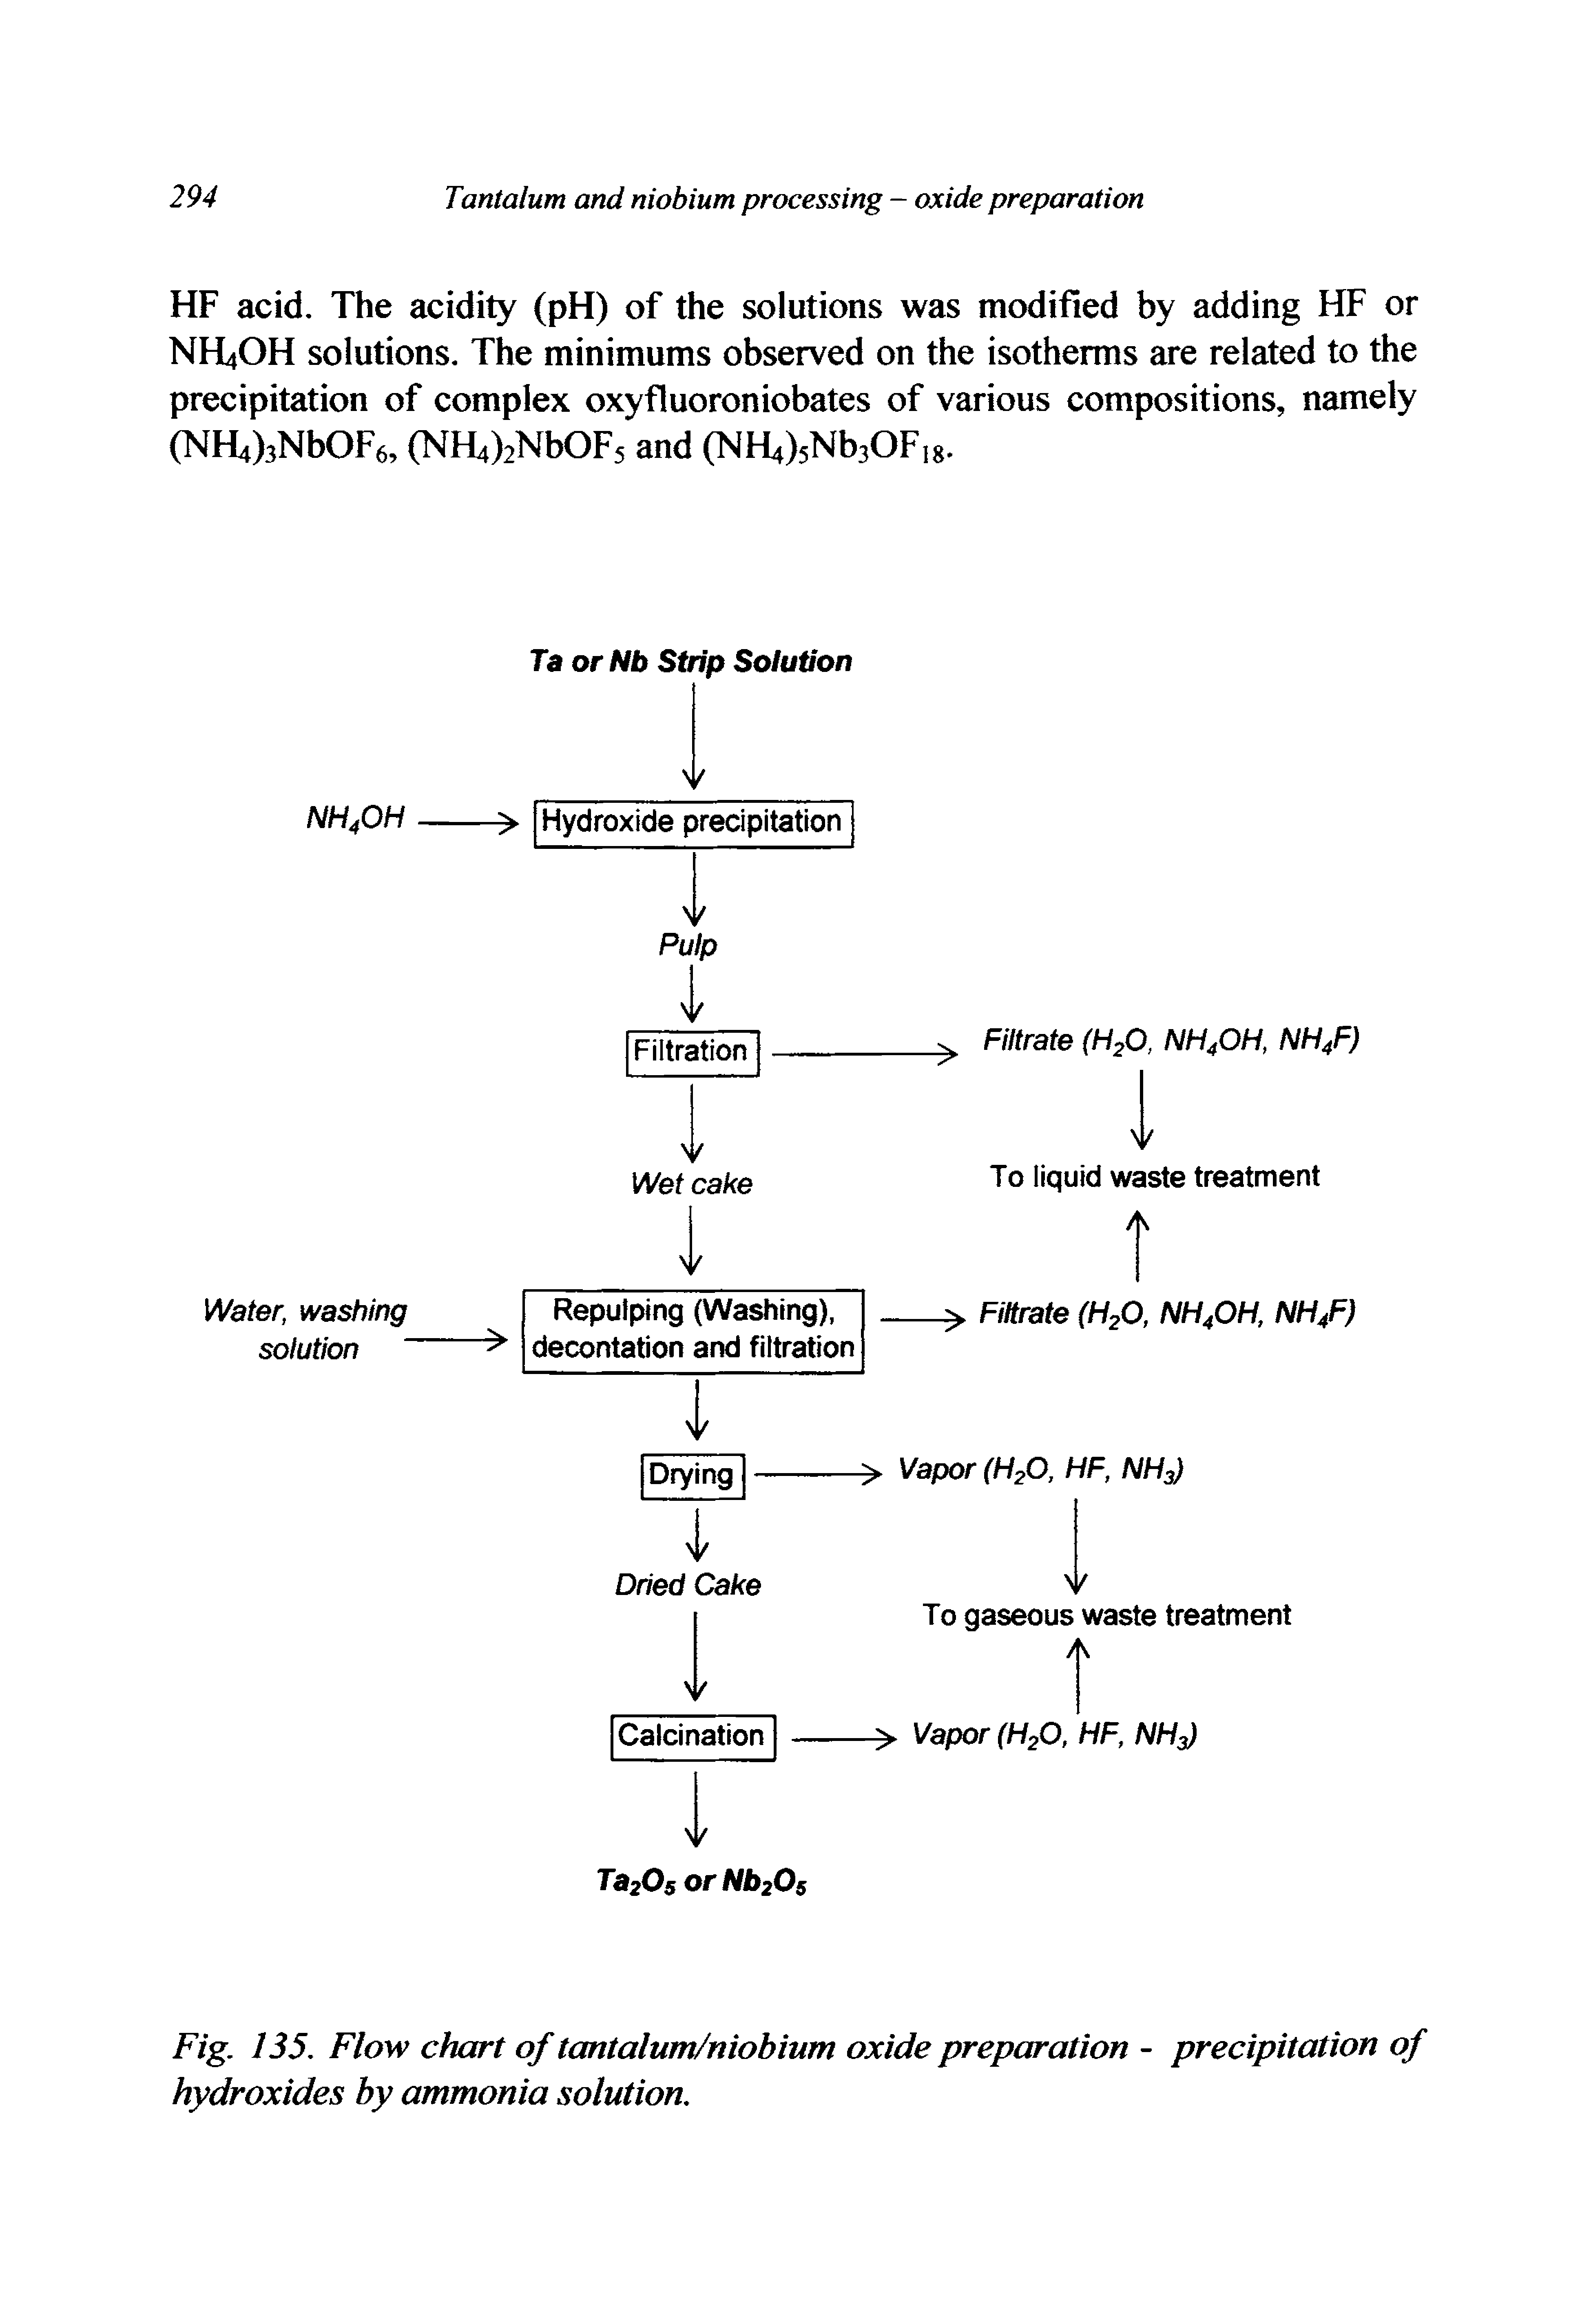 Fig. 135. Flow chart of tantalum/niohium oxide preparation - precipitation of hydroxides by ammonia solution.